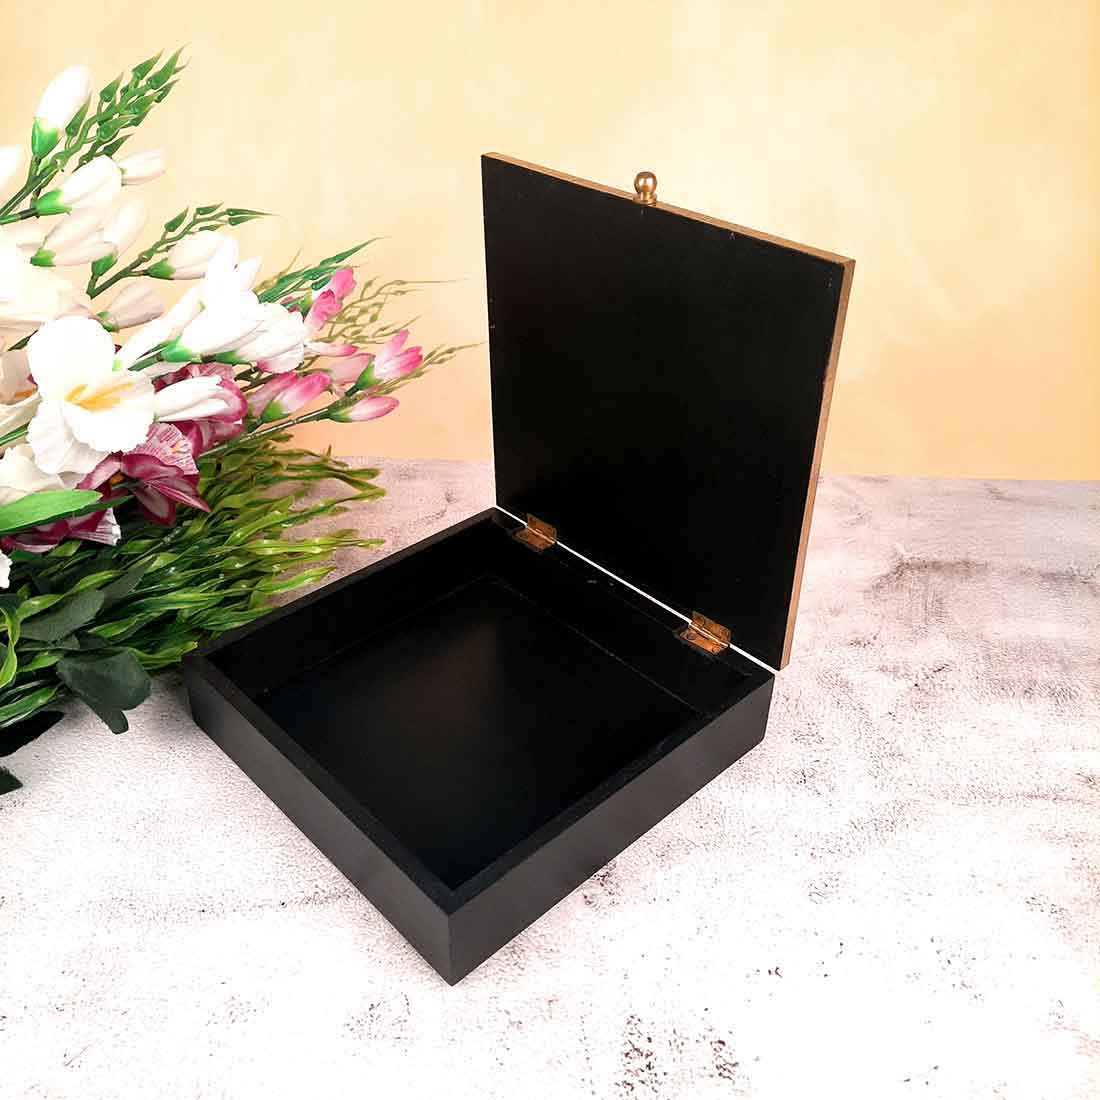 Decorative Box Brass | Necklace Box | Wooden Jewelry Box - 8 Inch